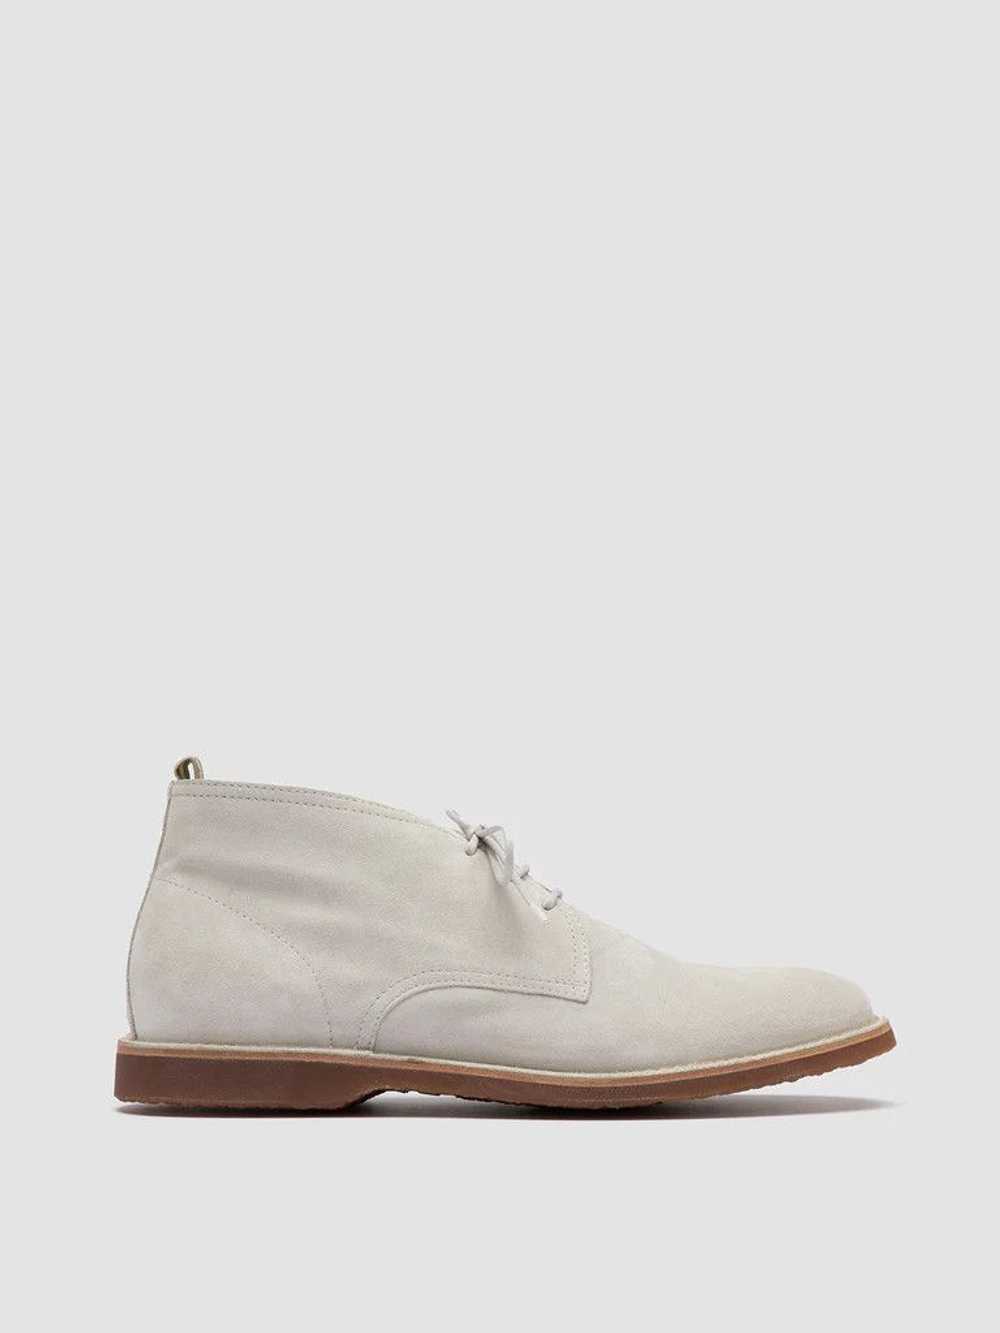 Brunello Cucinelli o1w1db10524 Shoes in White - image 1